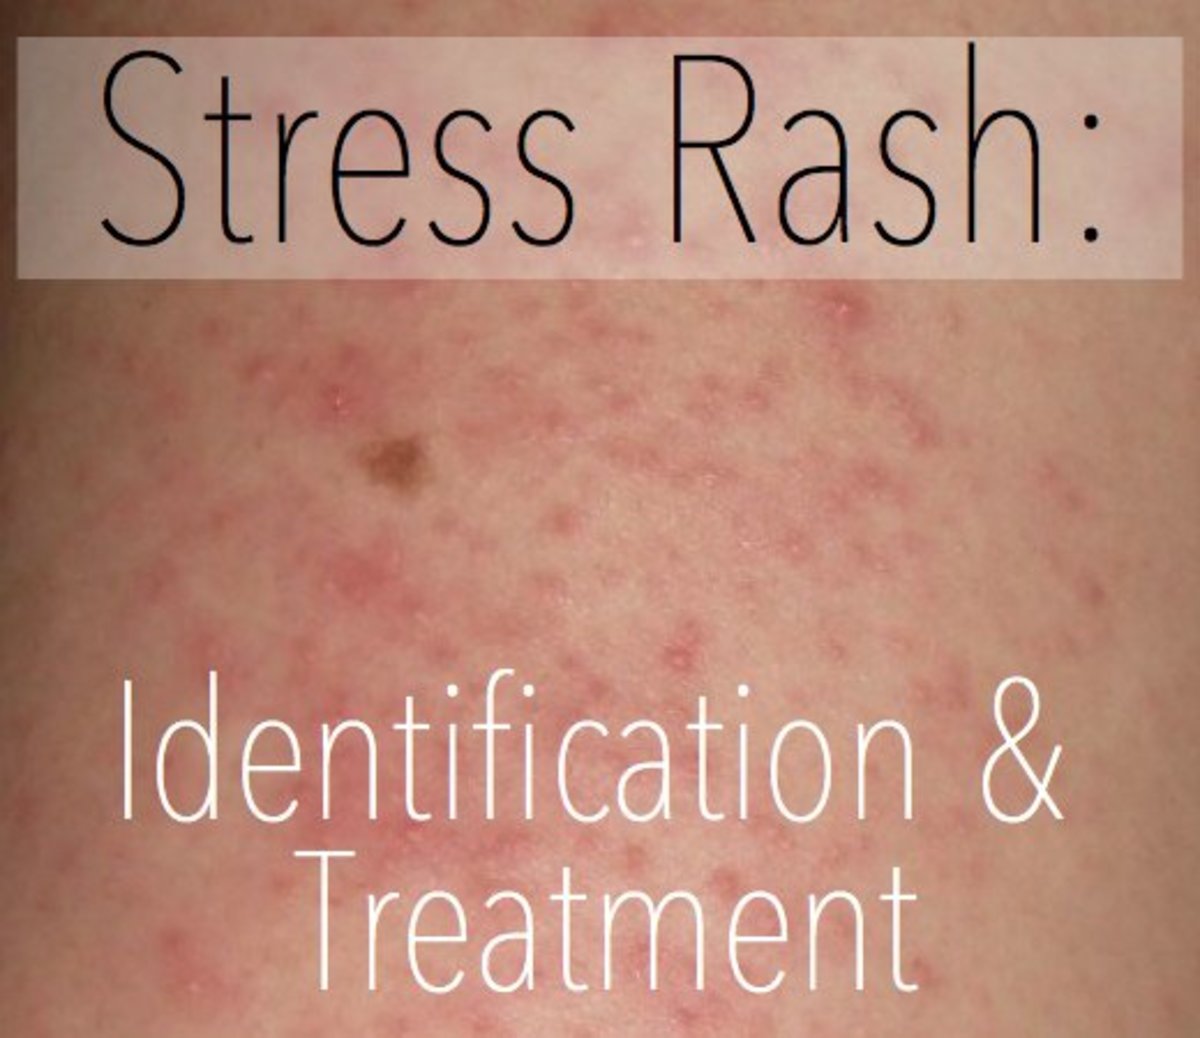 Stress Rash: Causes, Symptoms, Pictures, & Treatment